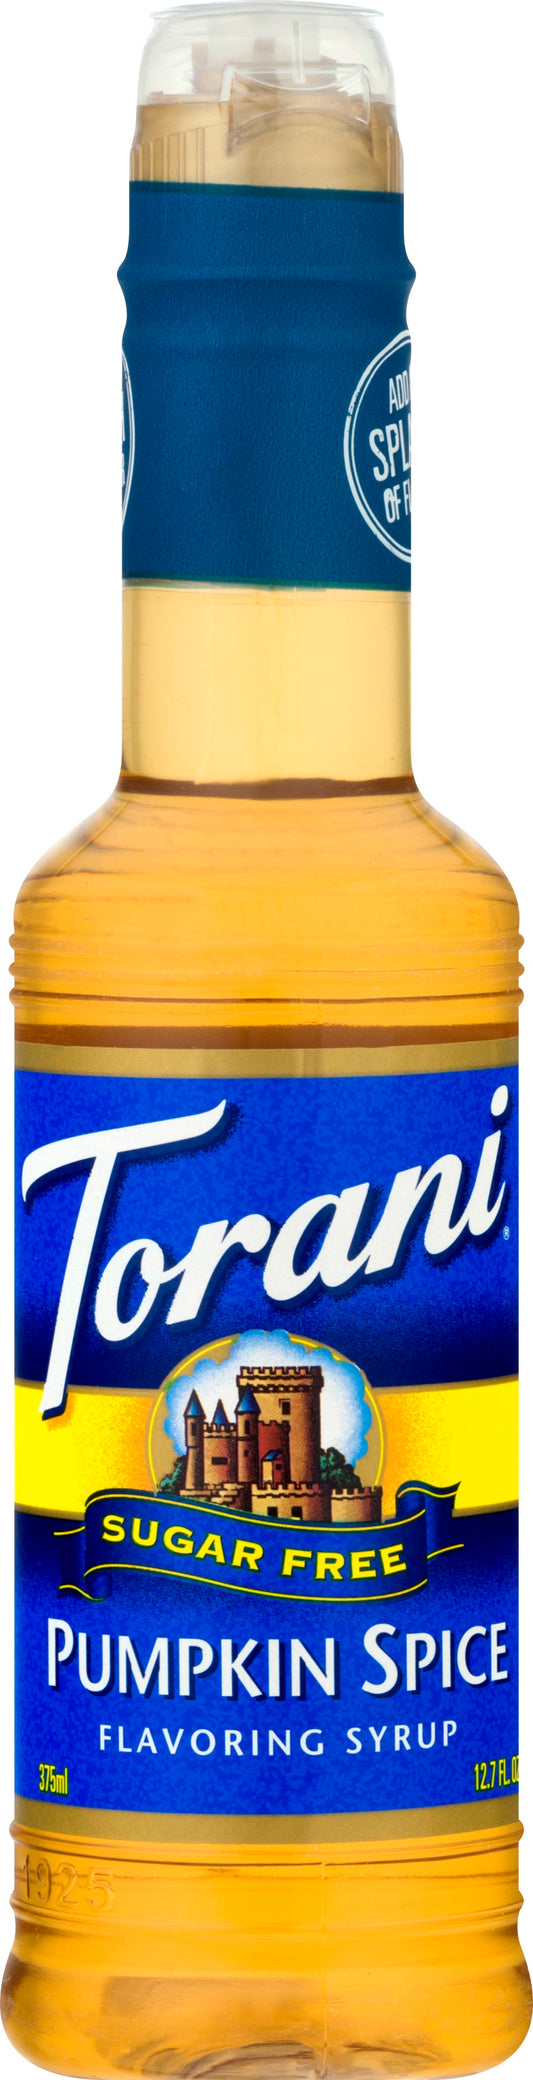 Torani Flavoring Syrup Sugar Free Pumpkin Pie - 12.7 Fl. oz (Pack of 4)